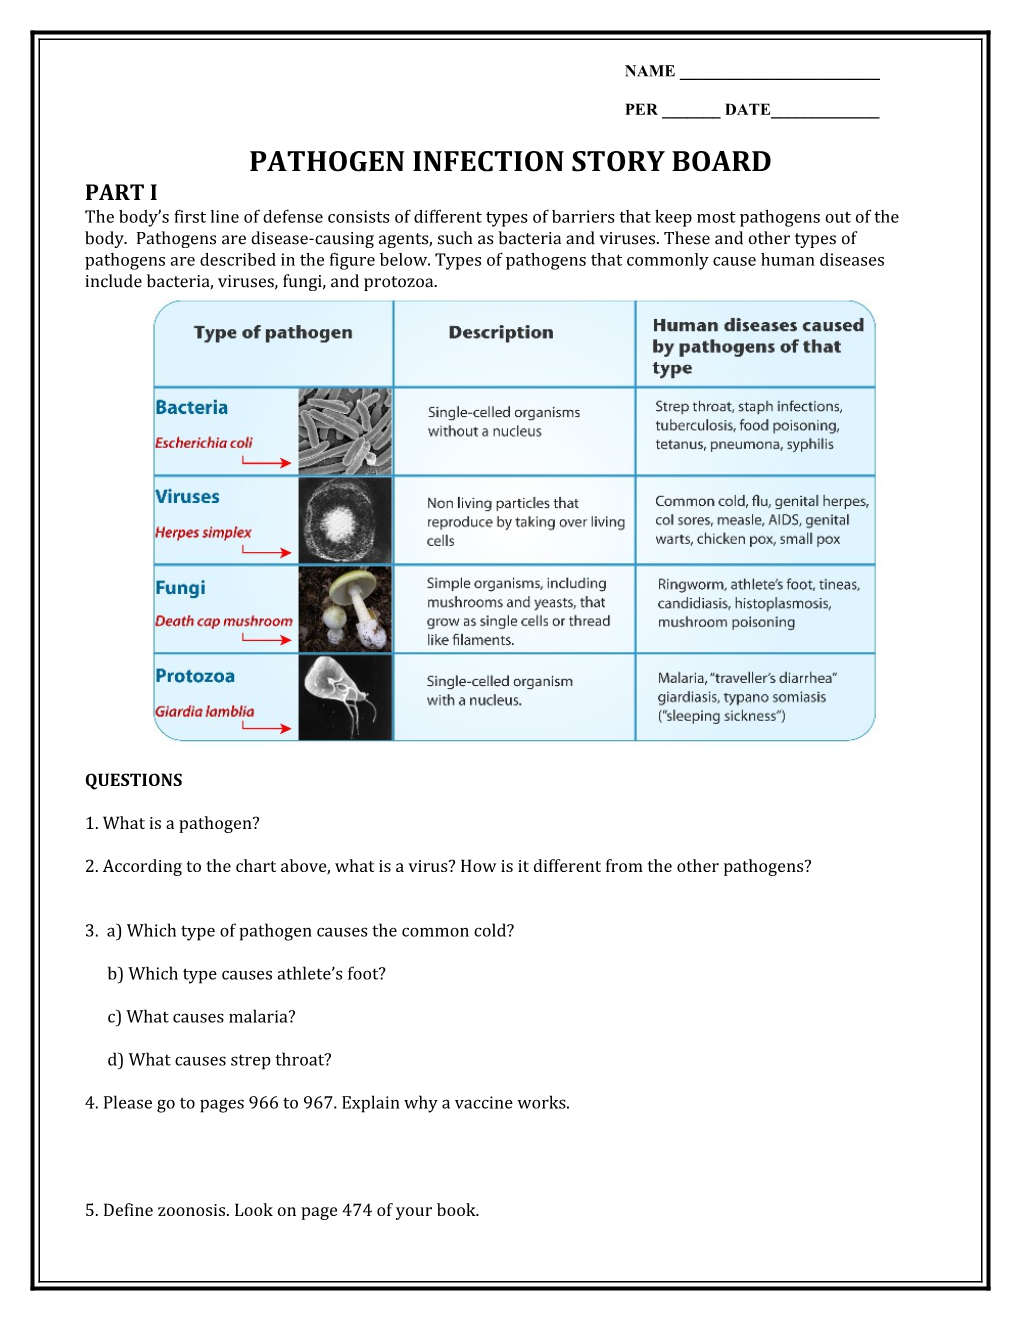 Pathogen Infection Story Board